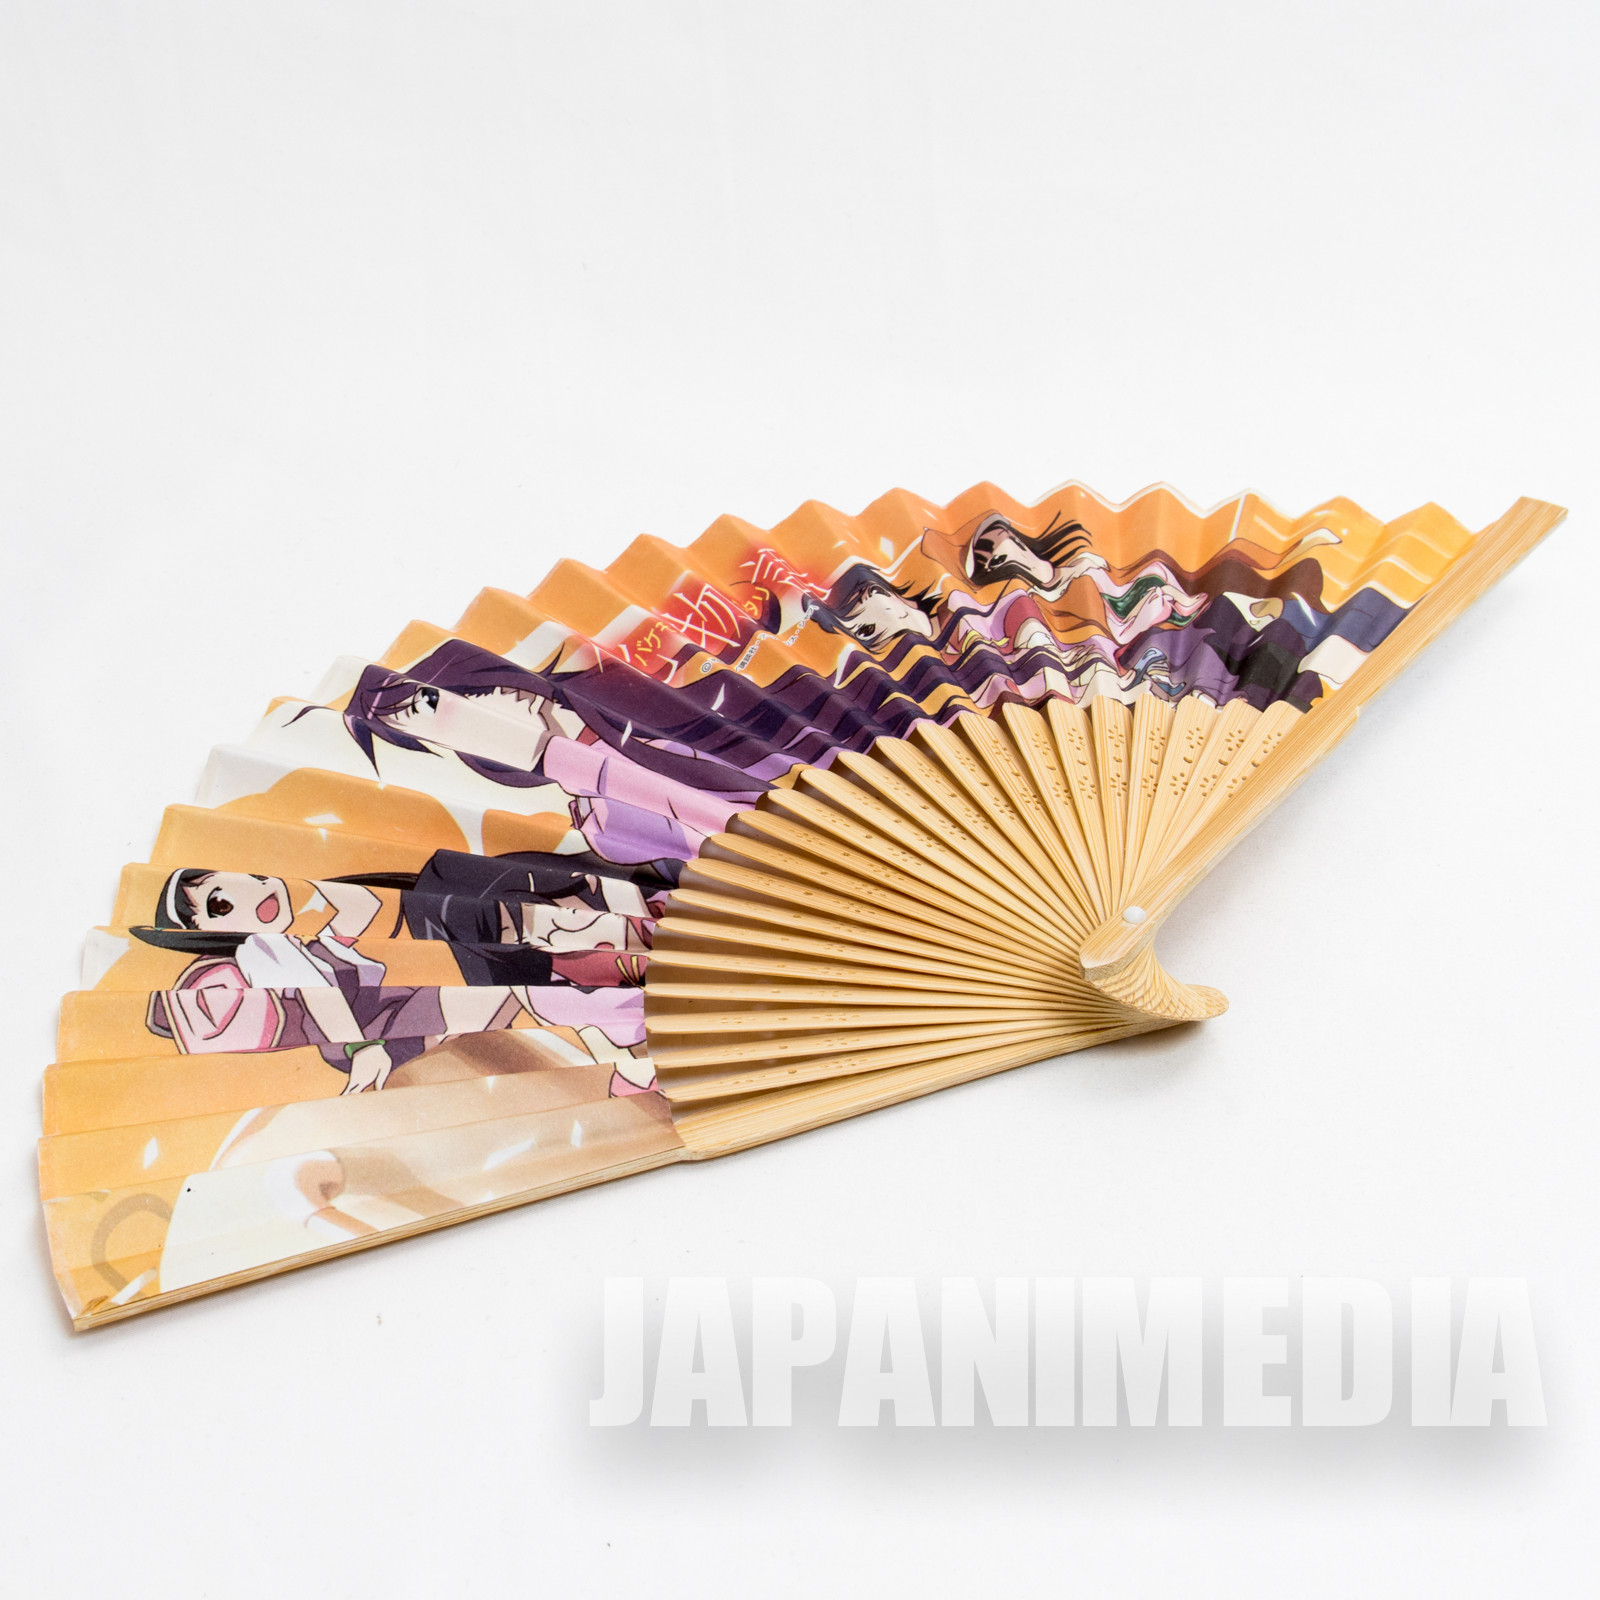 Bakemonogatari Characters Folding Fan Japanese Sensu JAPAN ANIME MANGA